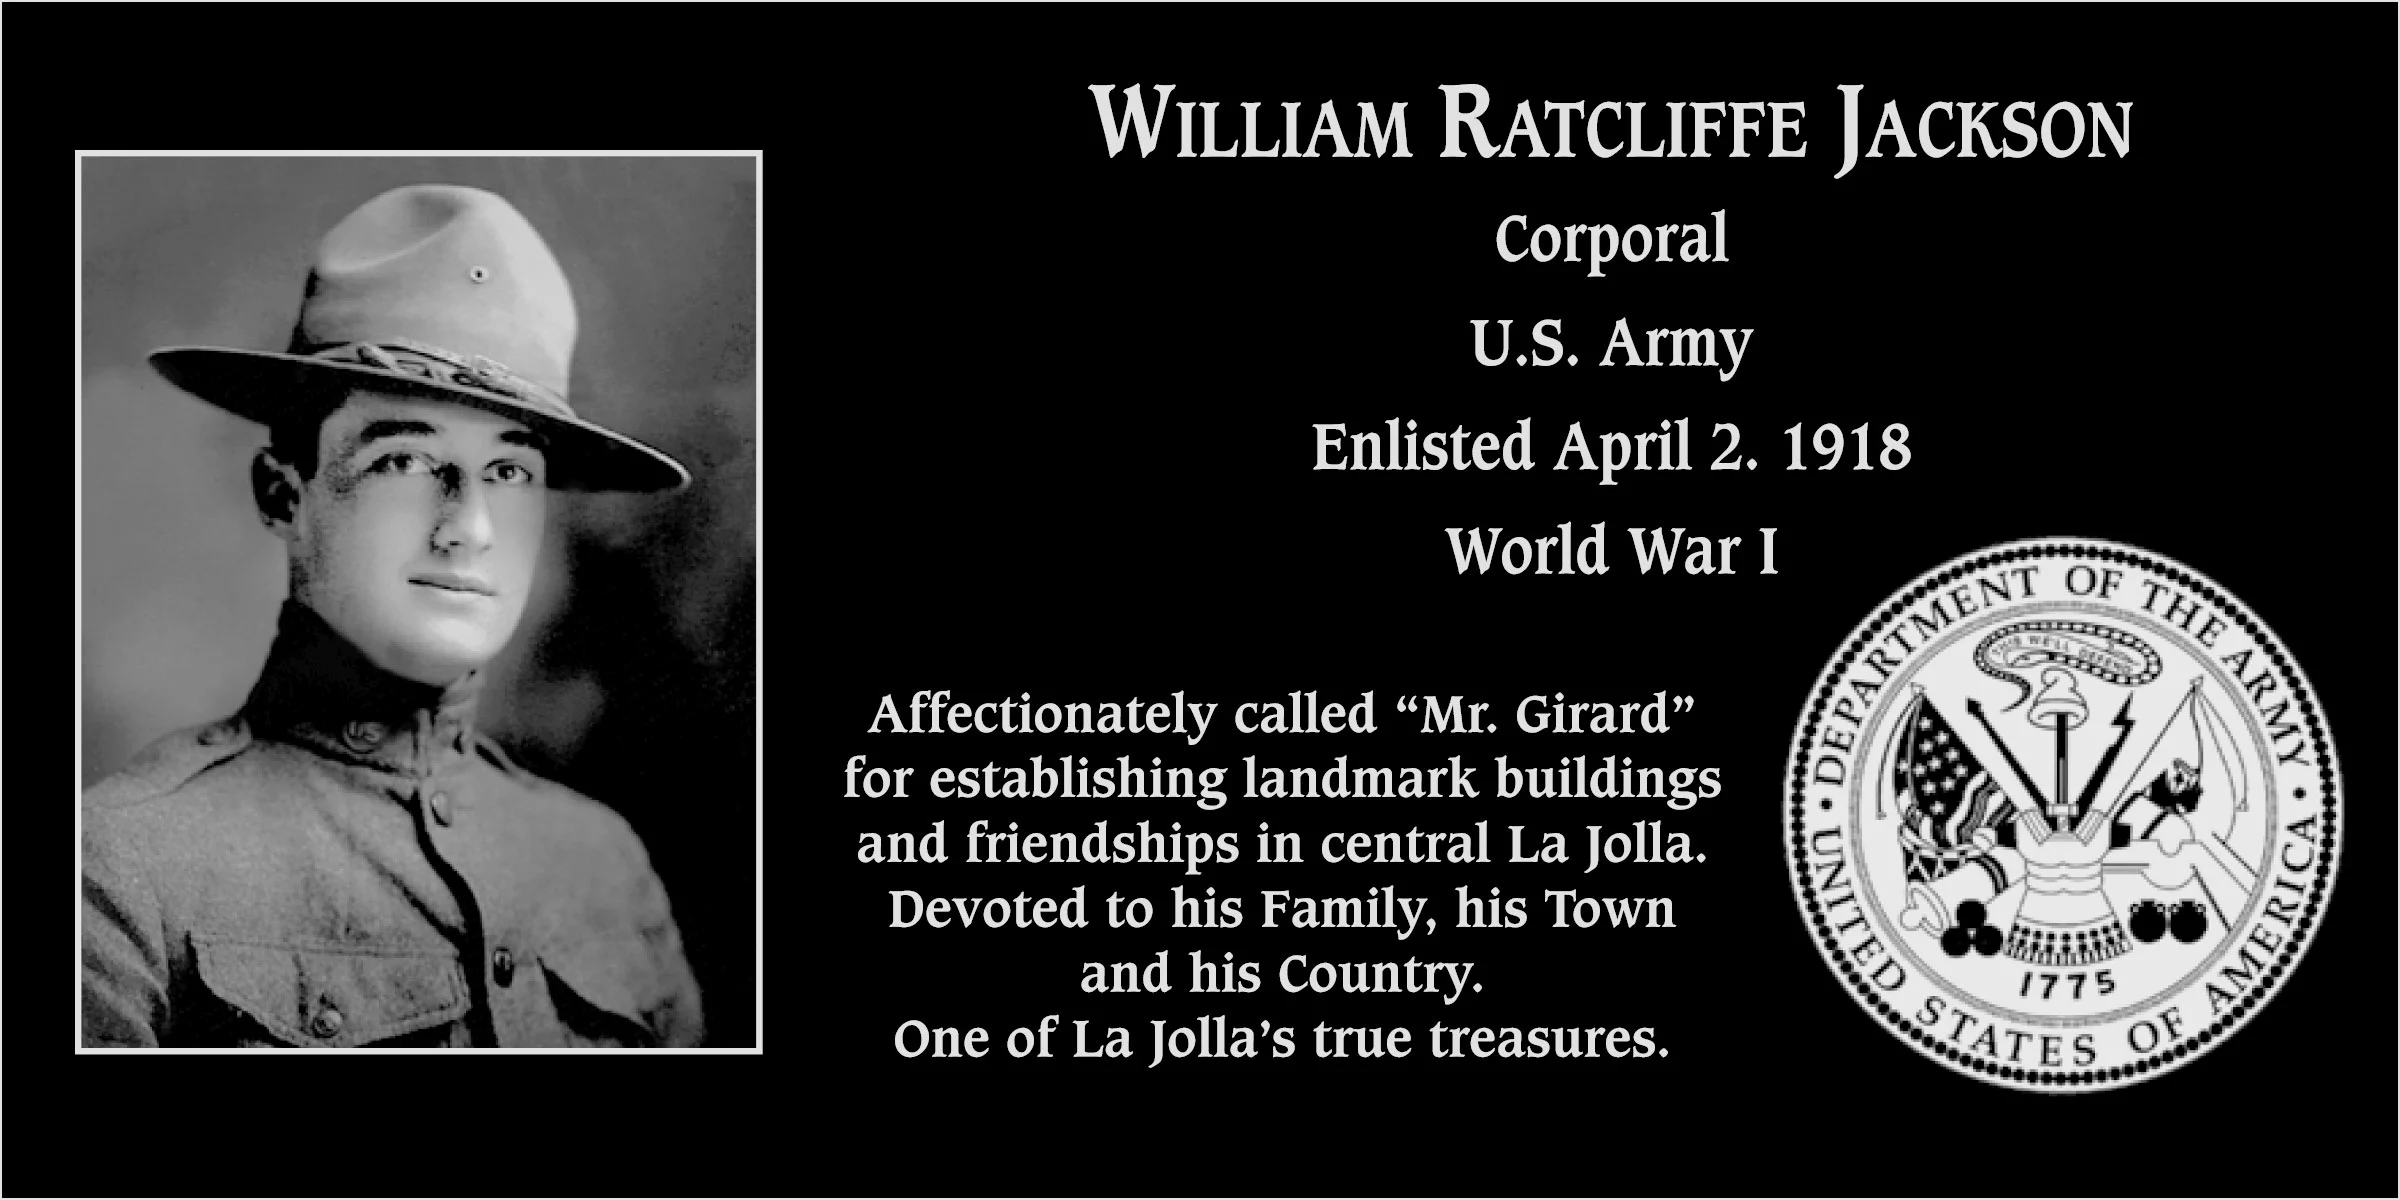 William Ratcliffe “Mr. Girard” Jackson